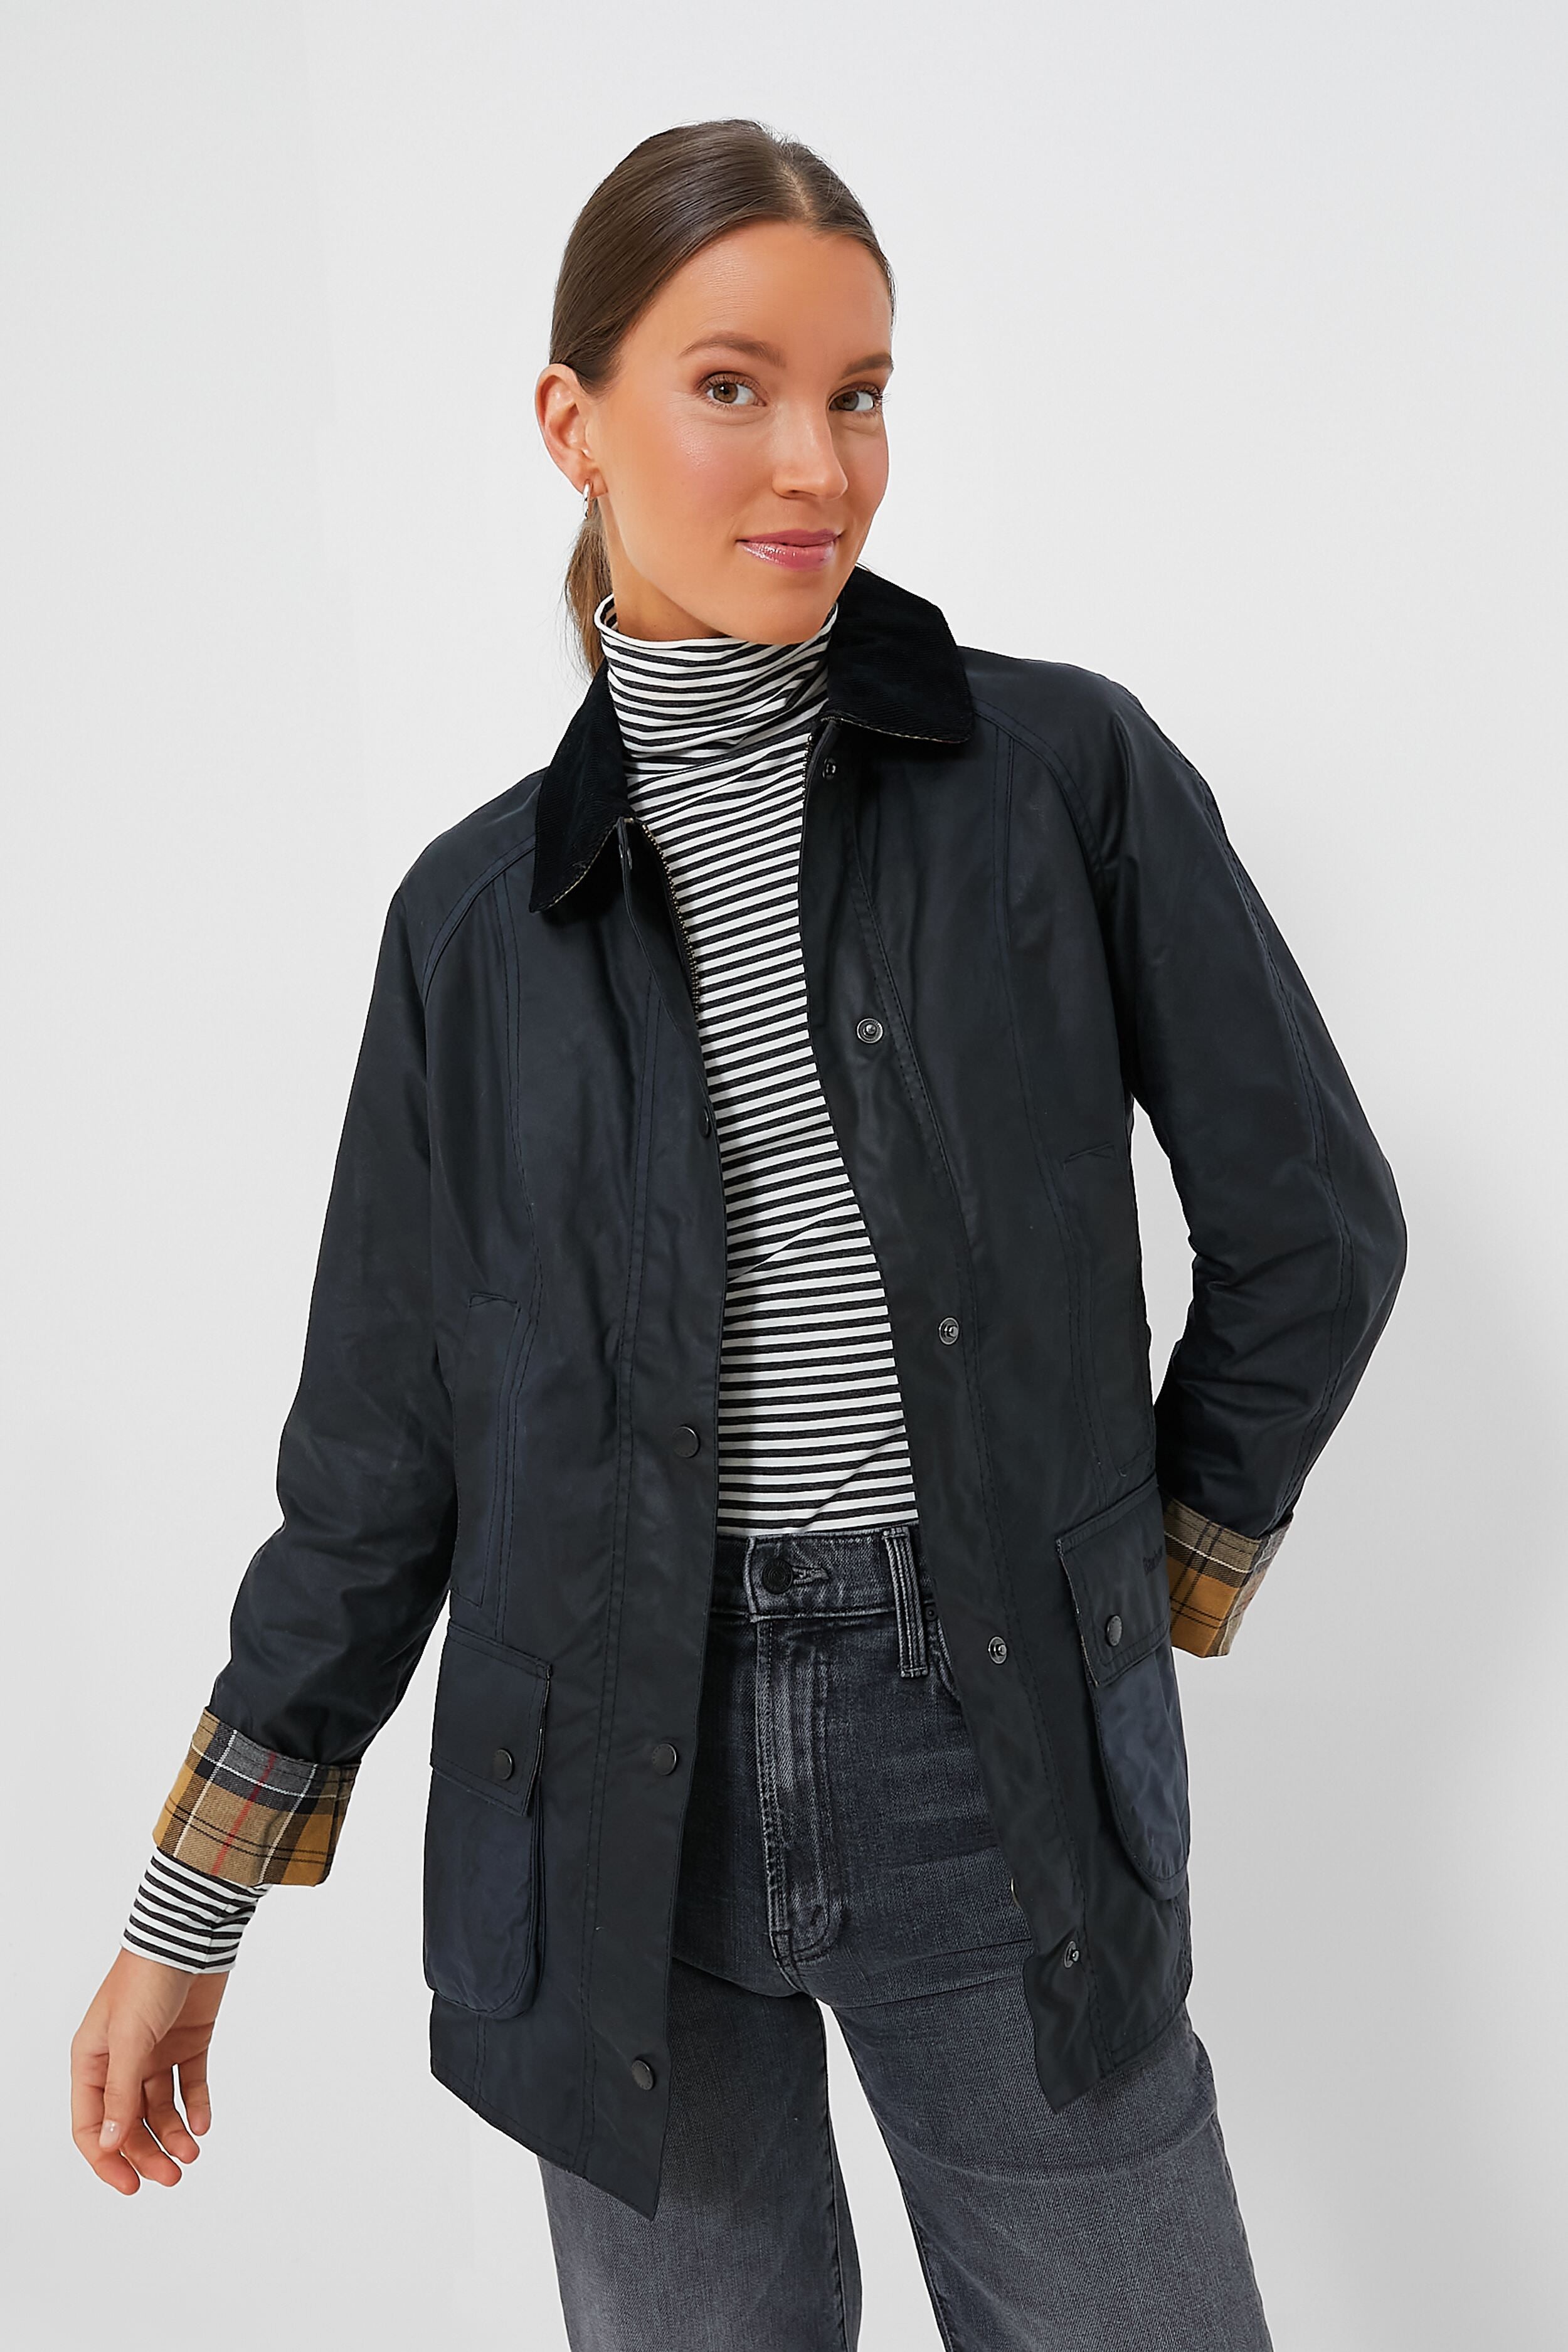 Classic Monogrammed Women's New Englander Rain Jacket